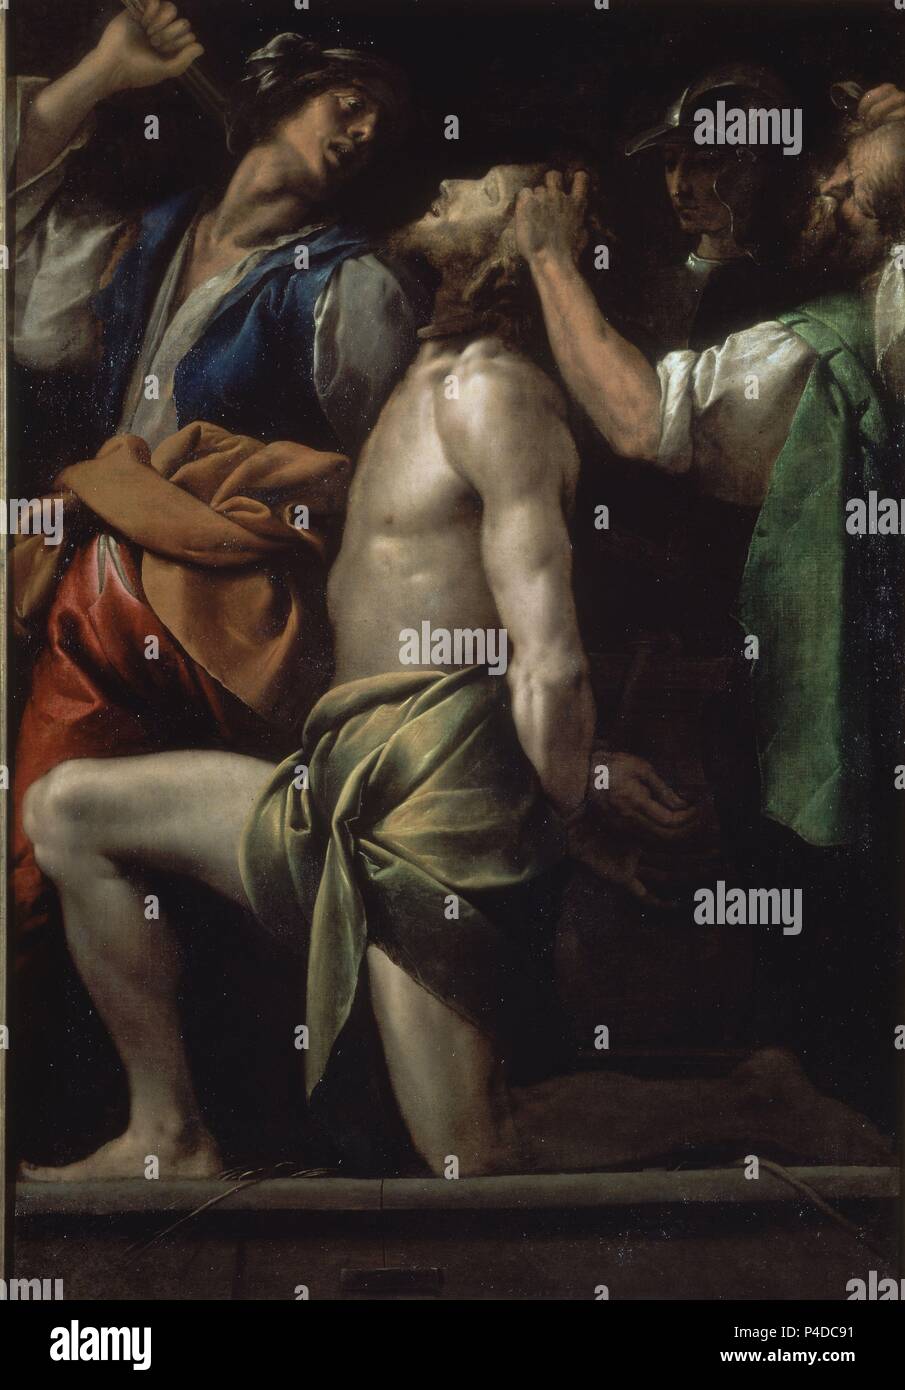 LA FLAGELACION DE CRISTO - HACIA 1615-1620 - OLEO/LIENZO - 167 x 116 cm - NP 6998 - BARROCO ITALIANO. Author: Pier Francesco Mazzucchelli (1573-1626). Location: MUSEO DEL PRADO-PINTURA, MADRID, SPAIN. Stock Photo